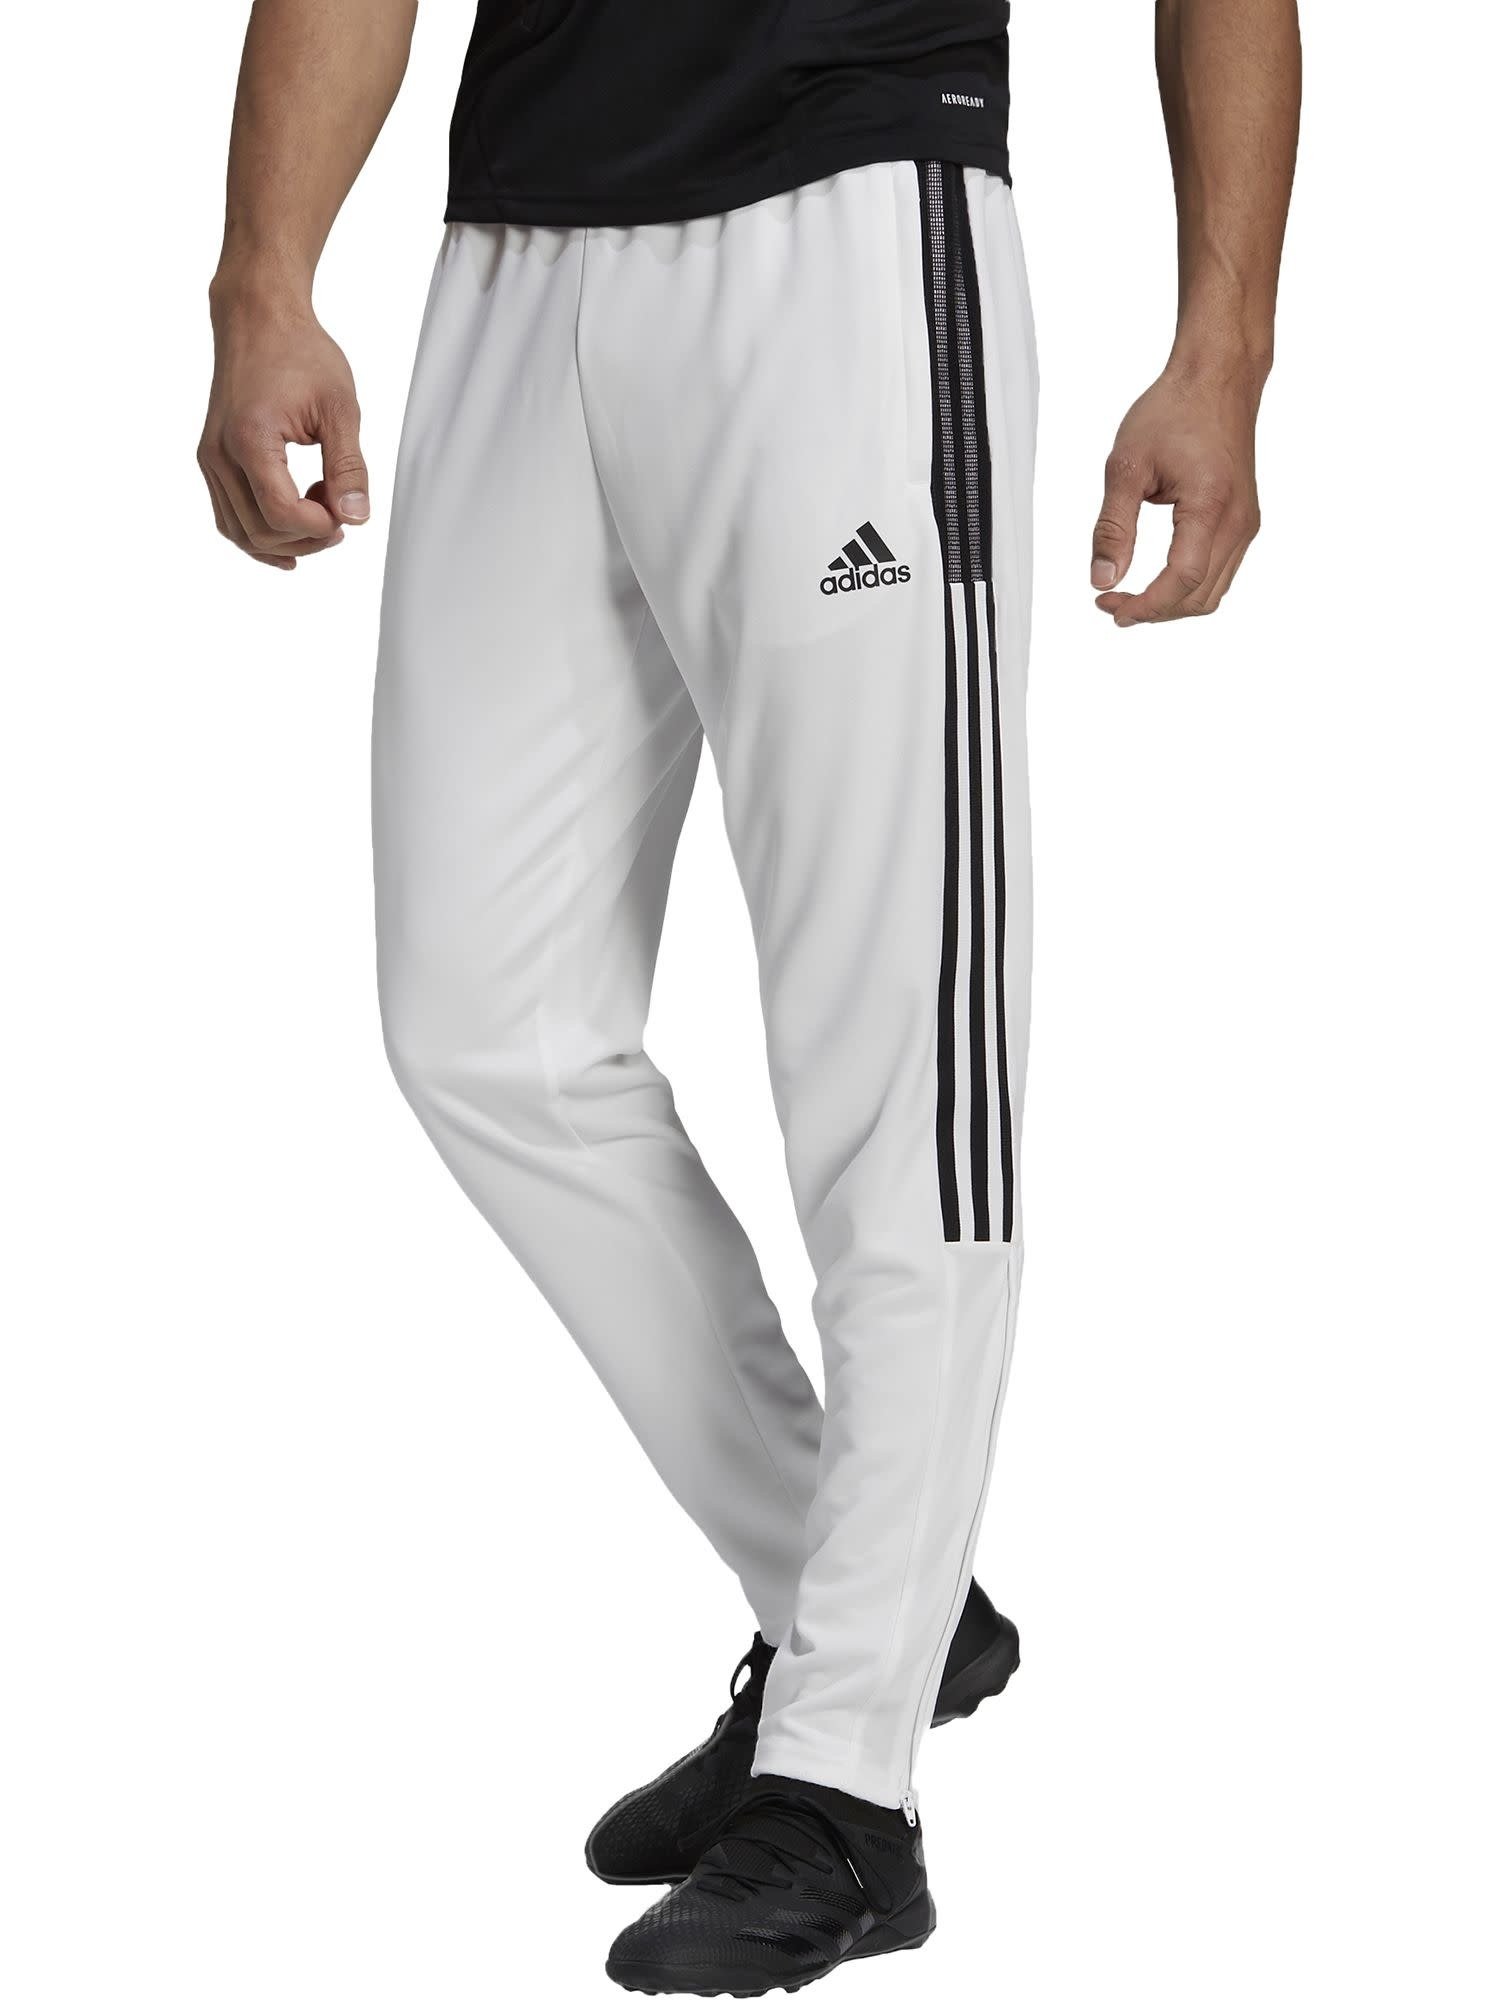 adidas adidas Tiro 21 Performance Training Pants - White - Soccerium